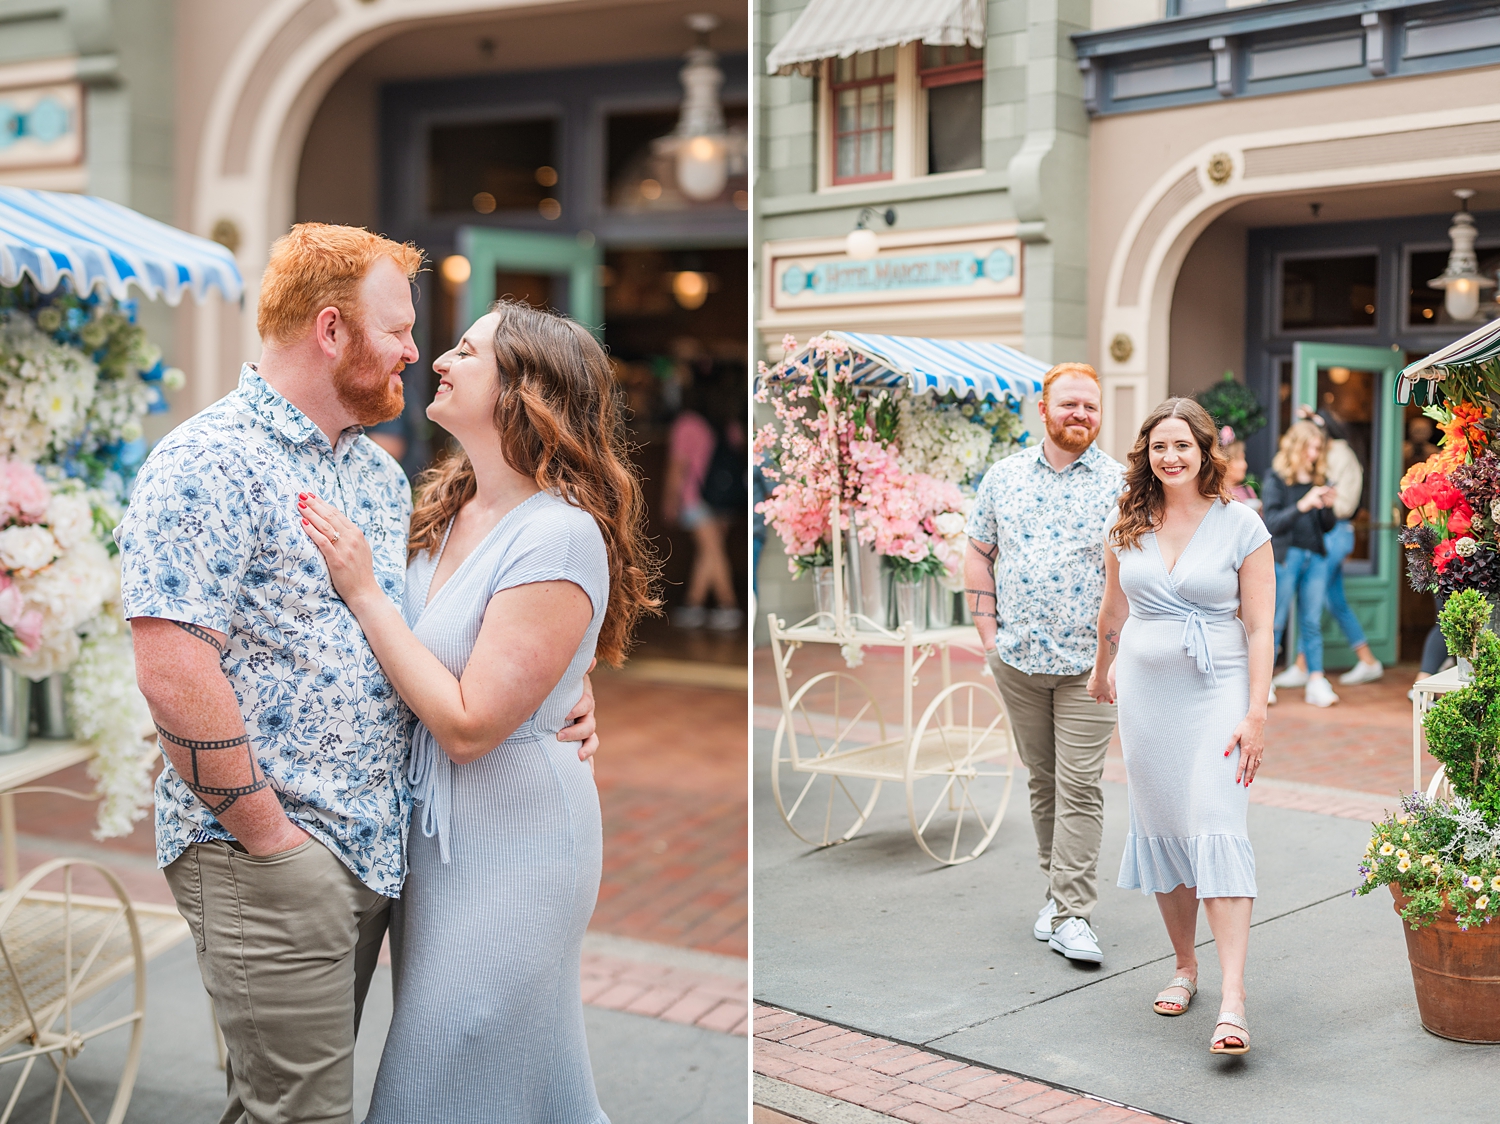 Disneyland Engagement | Disneyland Photographer | Wedding | It's a small world | teacups ride | Nataly Hernandez Photography -44.jpg